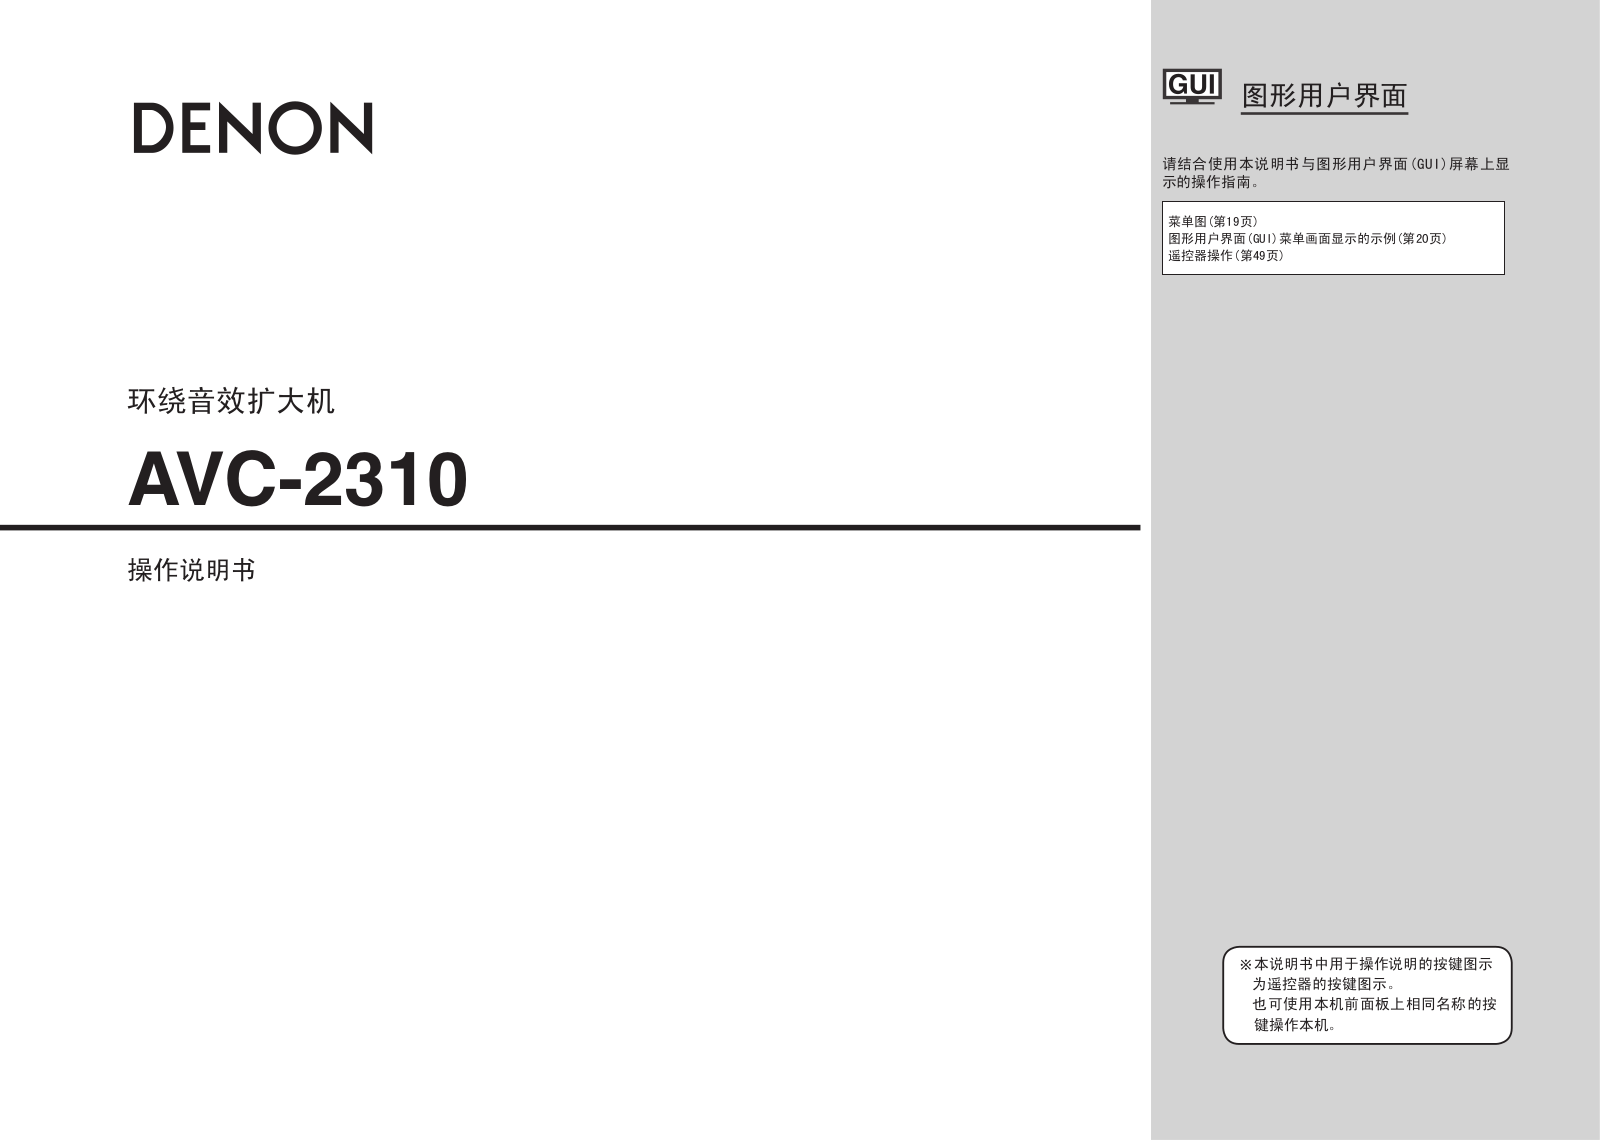 Denon AVC-2310 User Manual